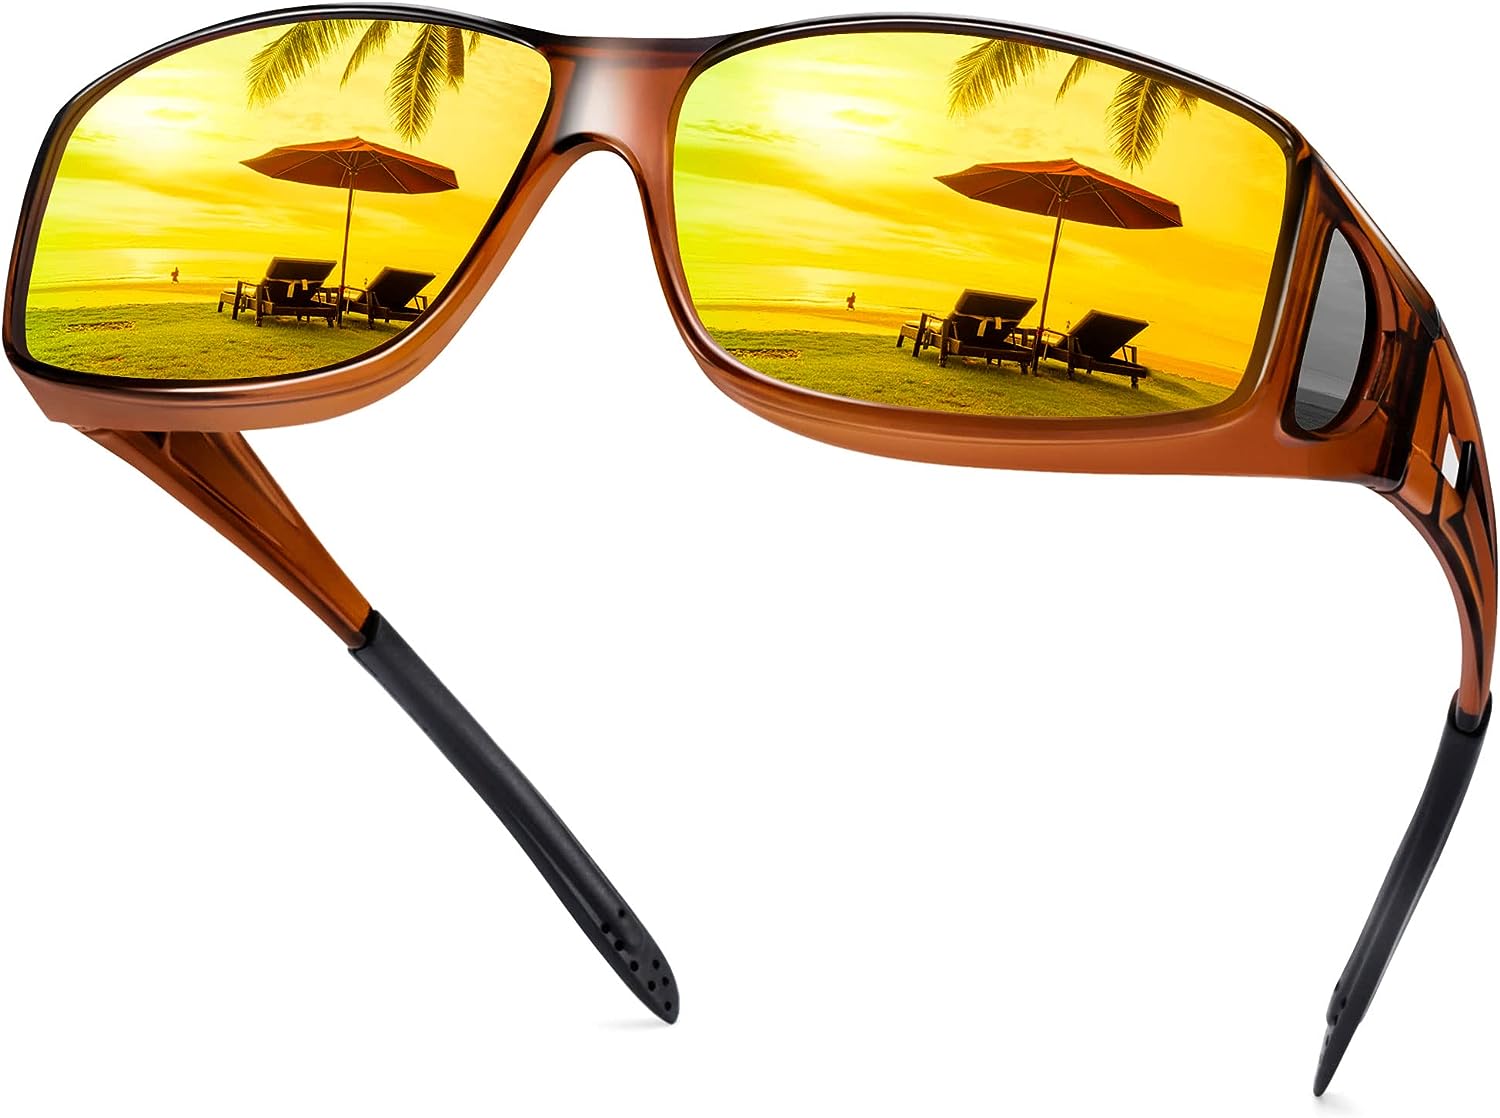 URUMQI Sunglasses Fit Over Glasses, Polarized 100% UV Protection Wrap-Around Sunglasses for Men & Women Driving